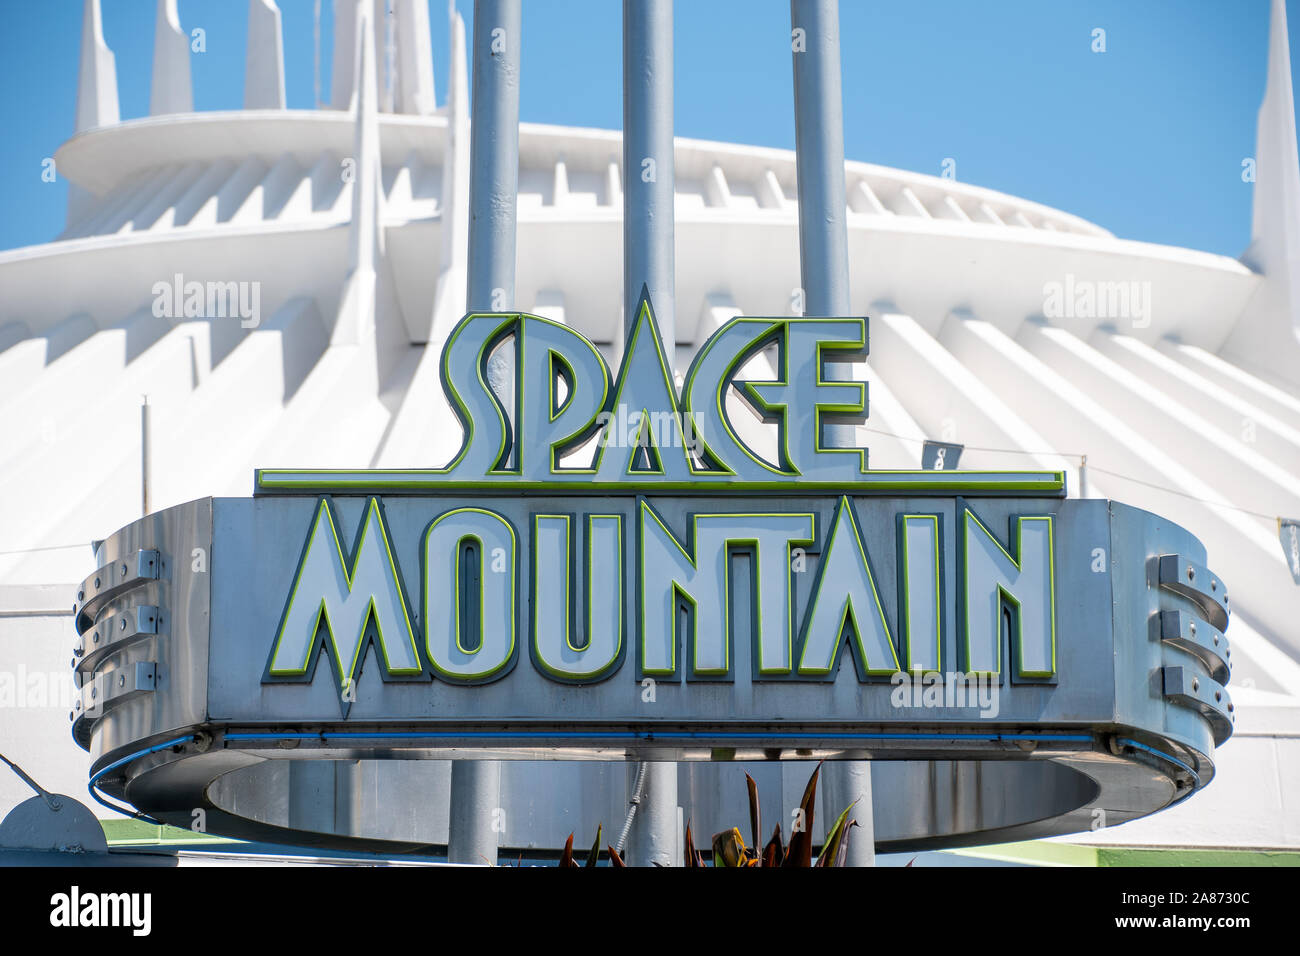 magic kingdom space mountain